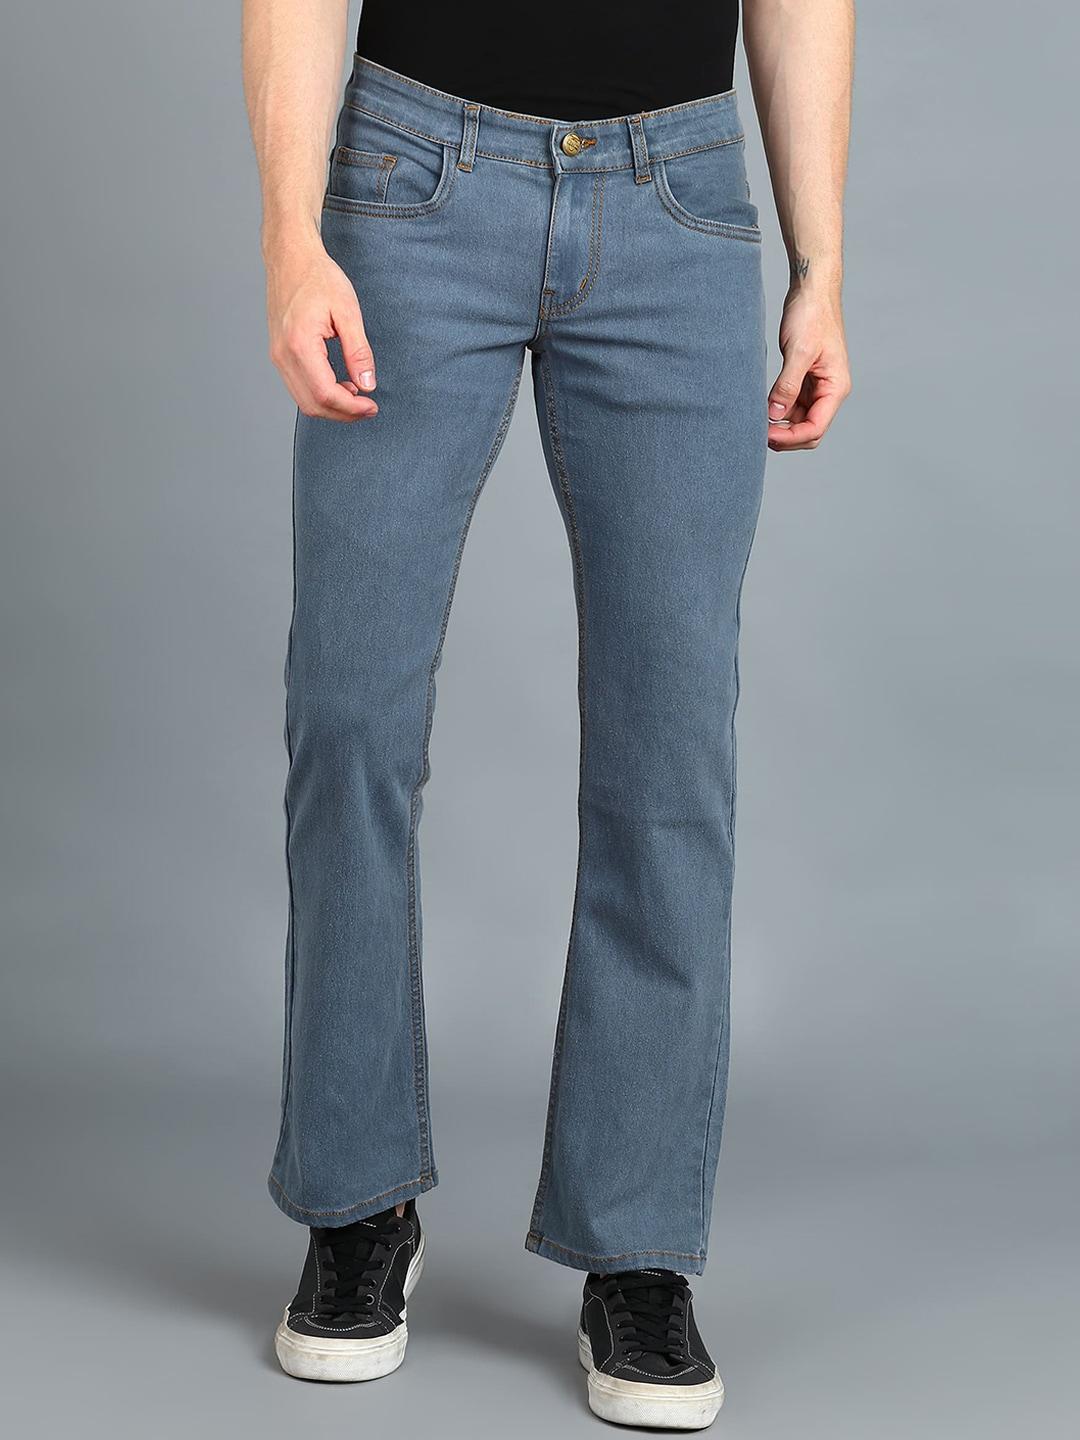 urbano-fashion-men-mid-rise-light-fade-stretchable-bootcut-jeans